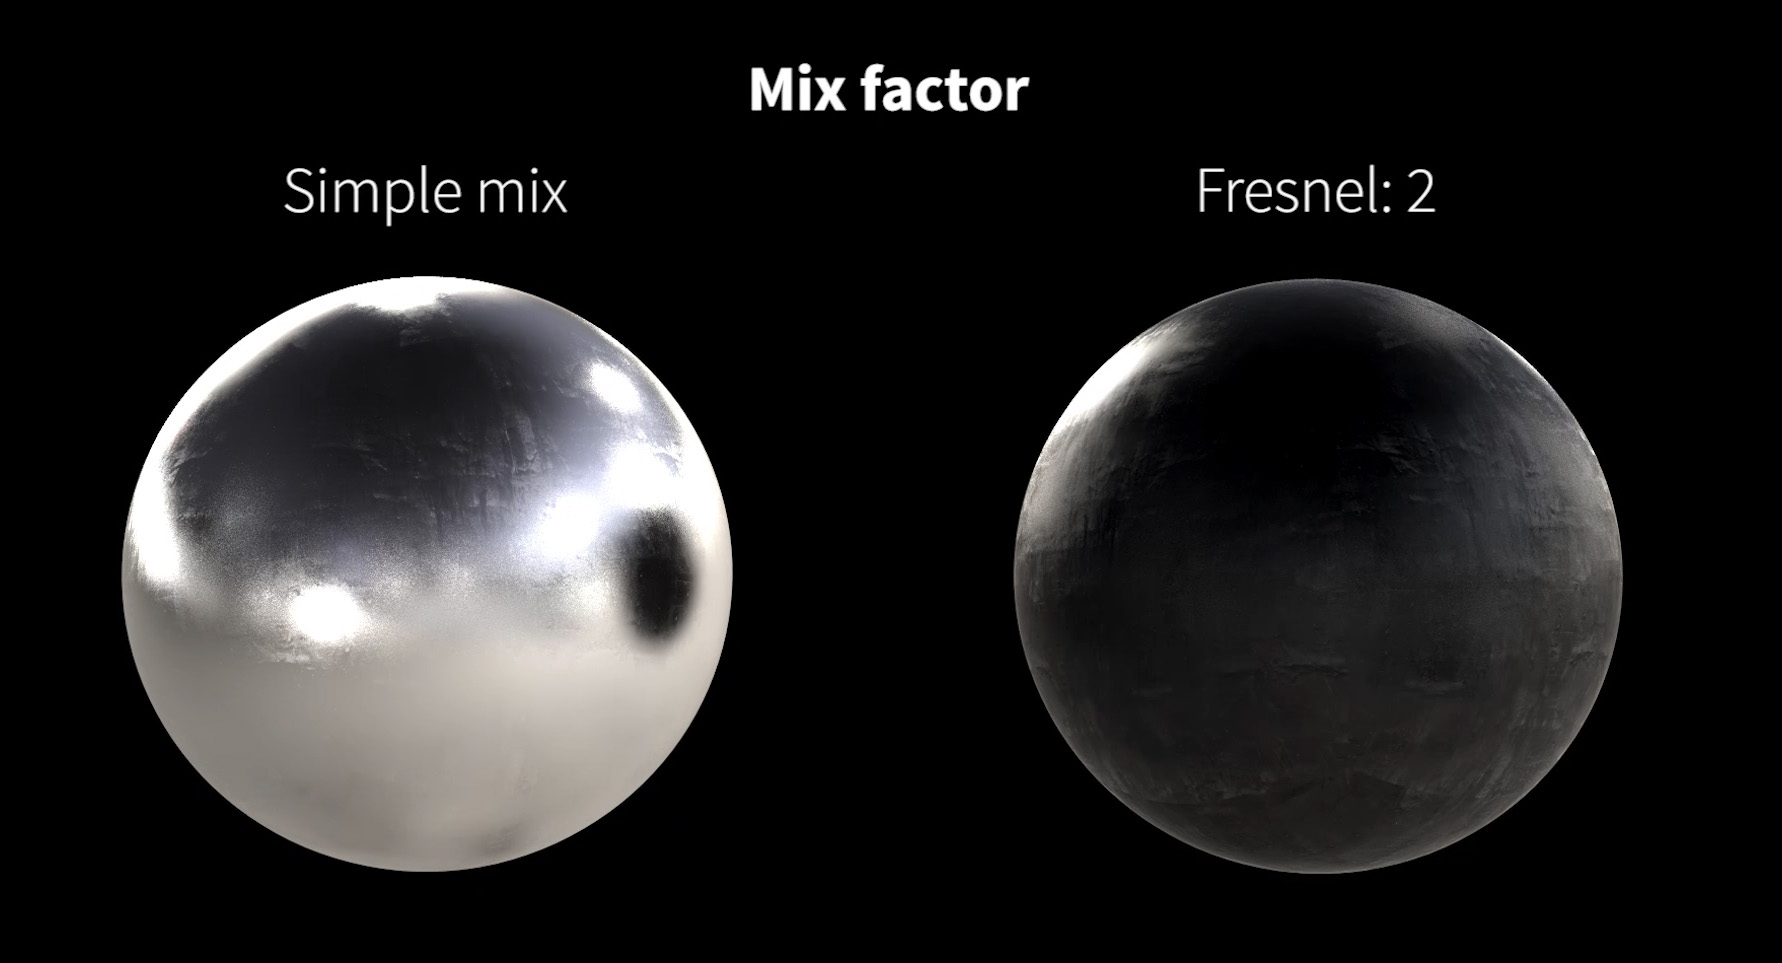 fresnel mix factor